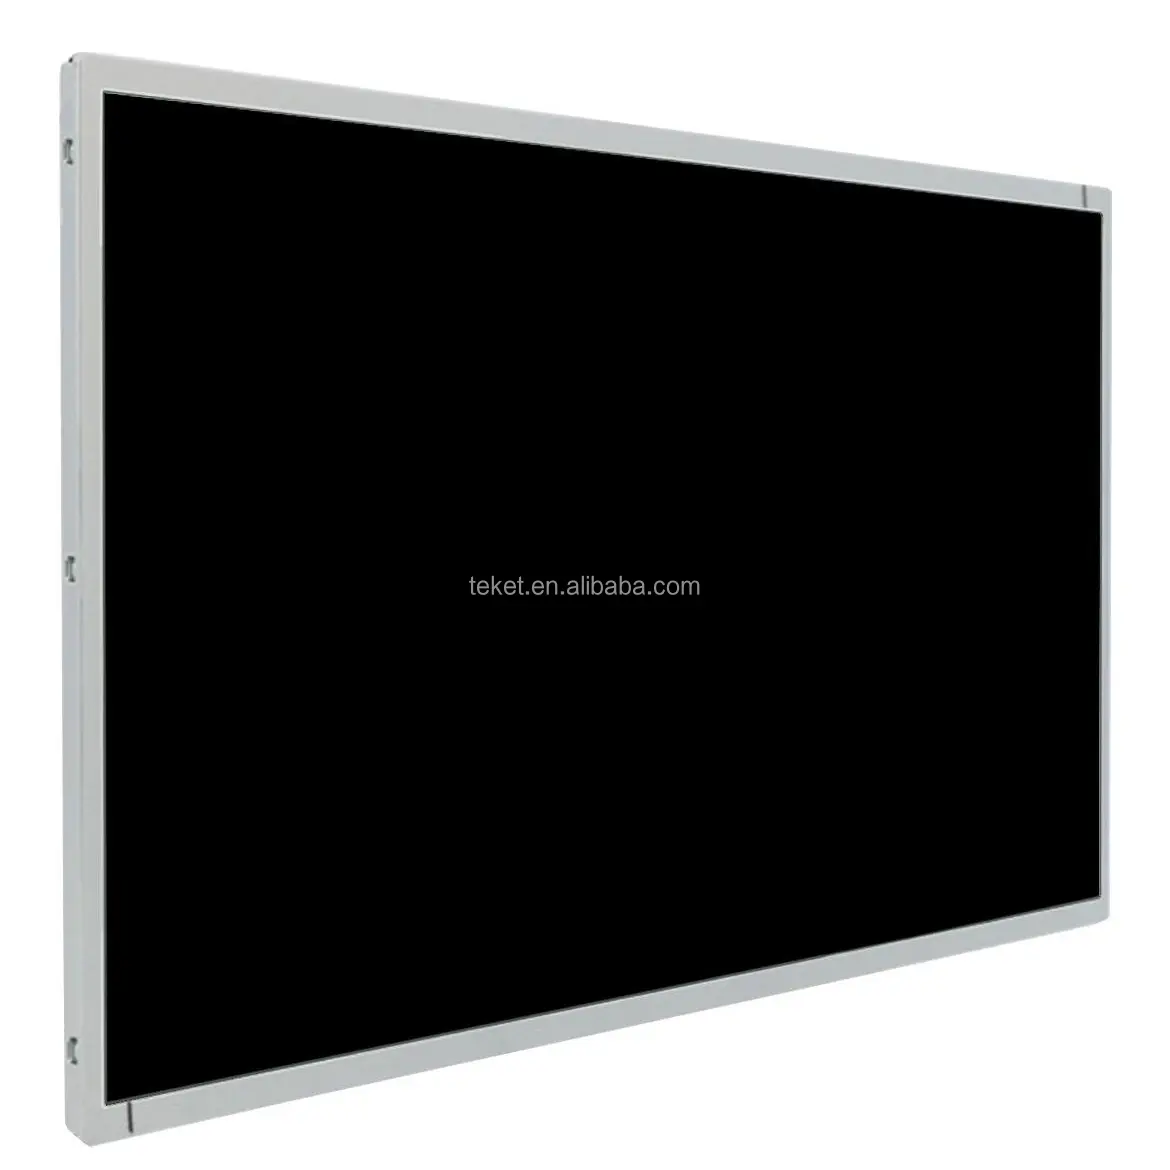 AUO LCD 15 "ATM, POS, 간이 건축물, IPC (산업 PC) 및 공장 자동화 (FA) 를 위한 패널 G150XG01 V1